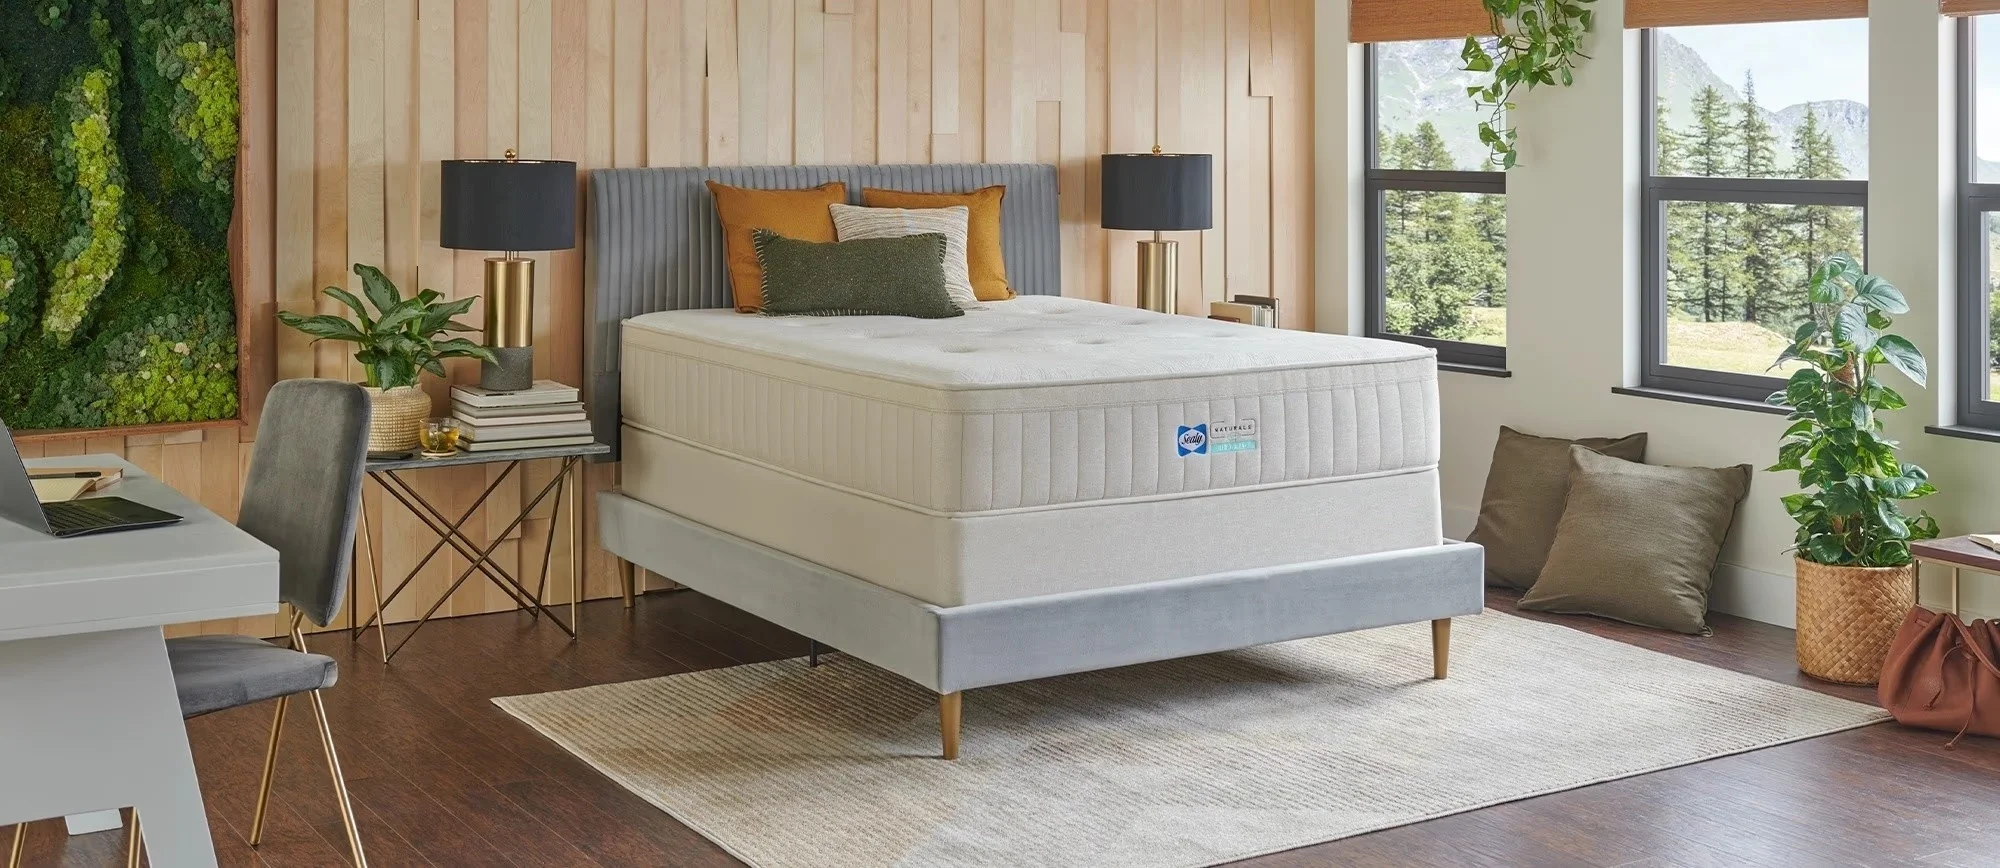 Sealy Naturals Hybrid mattress